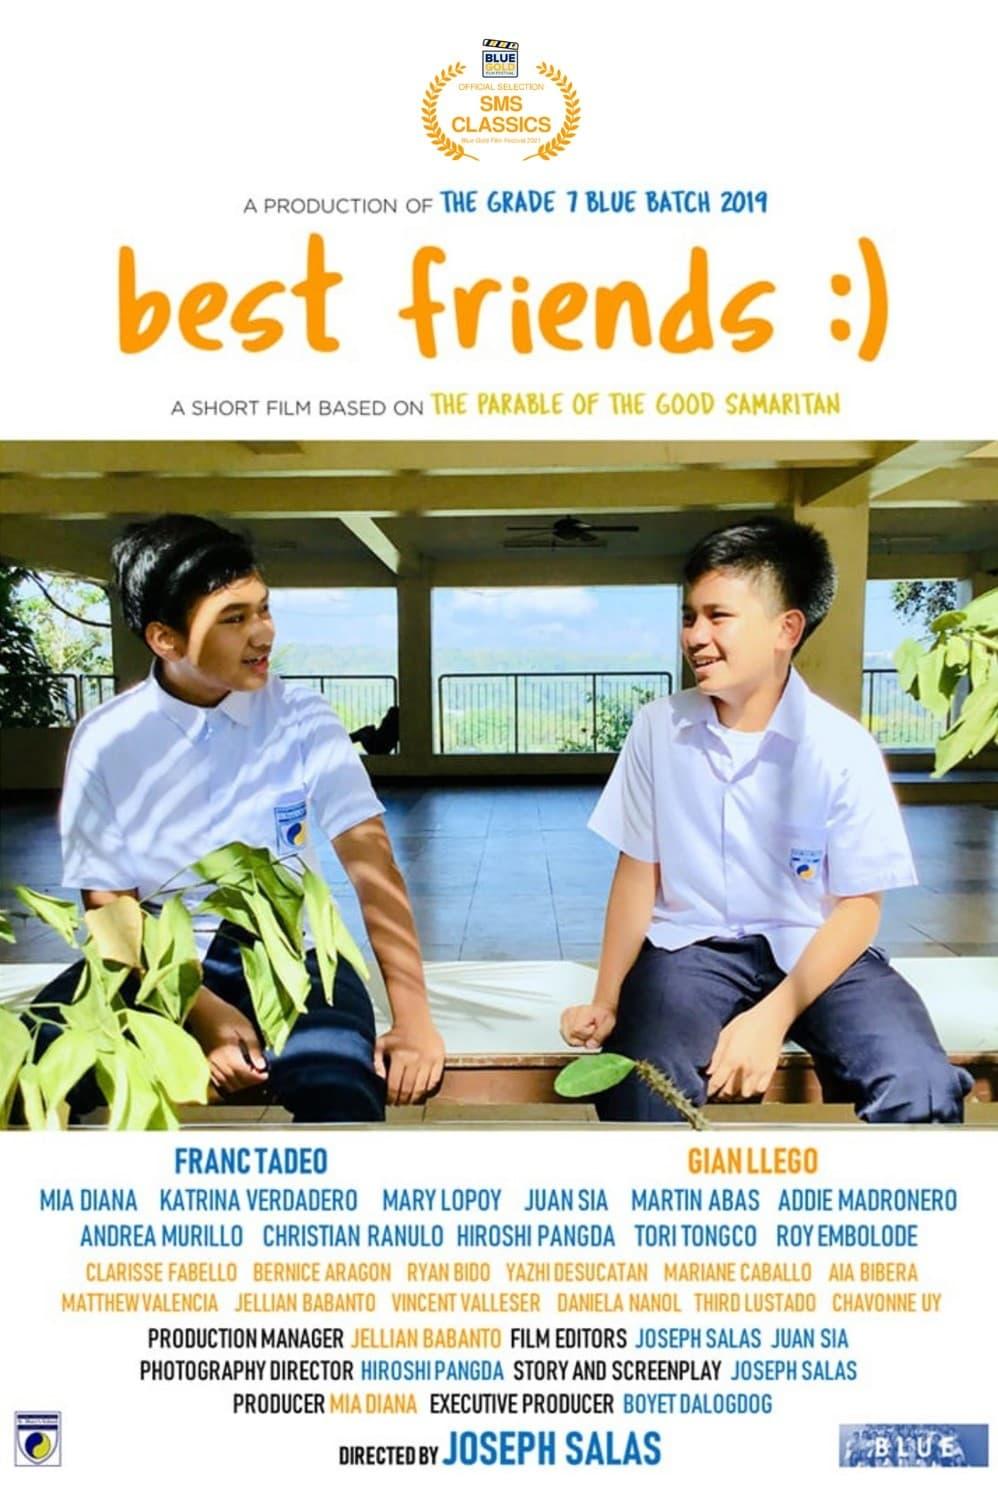 Best Friends poster